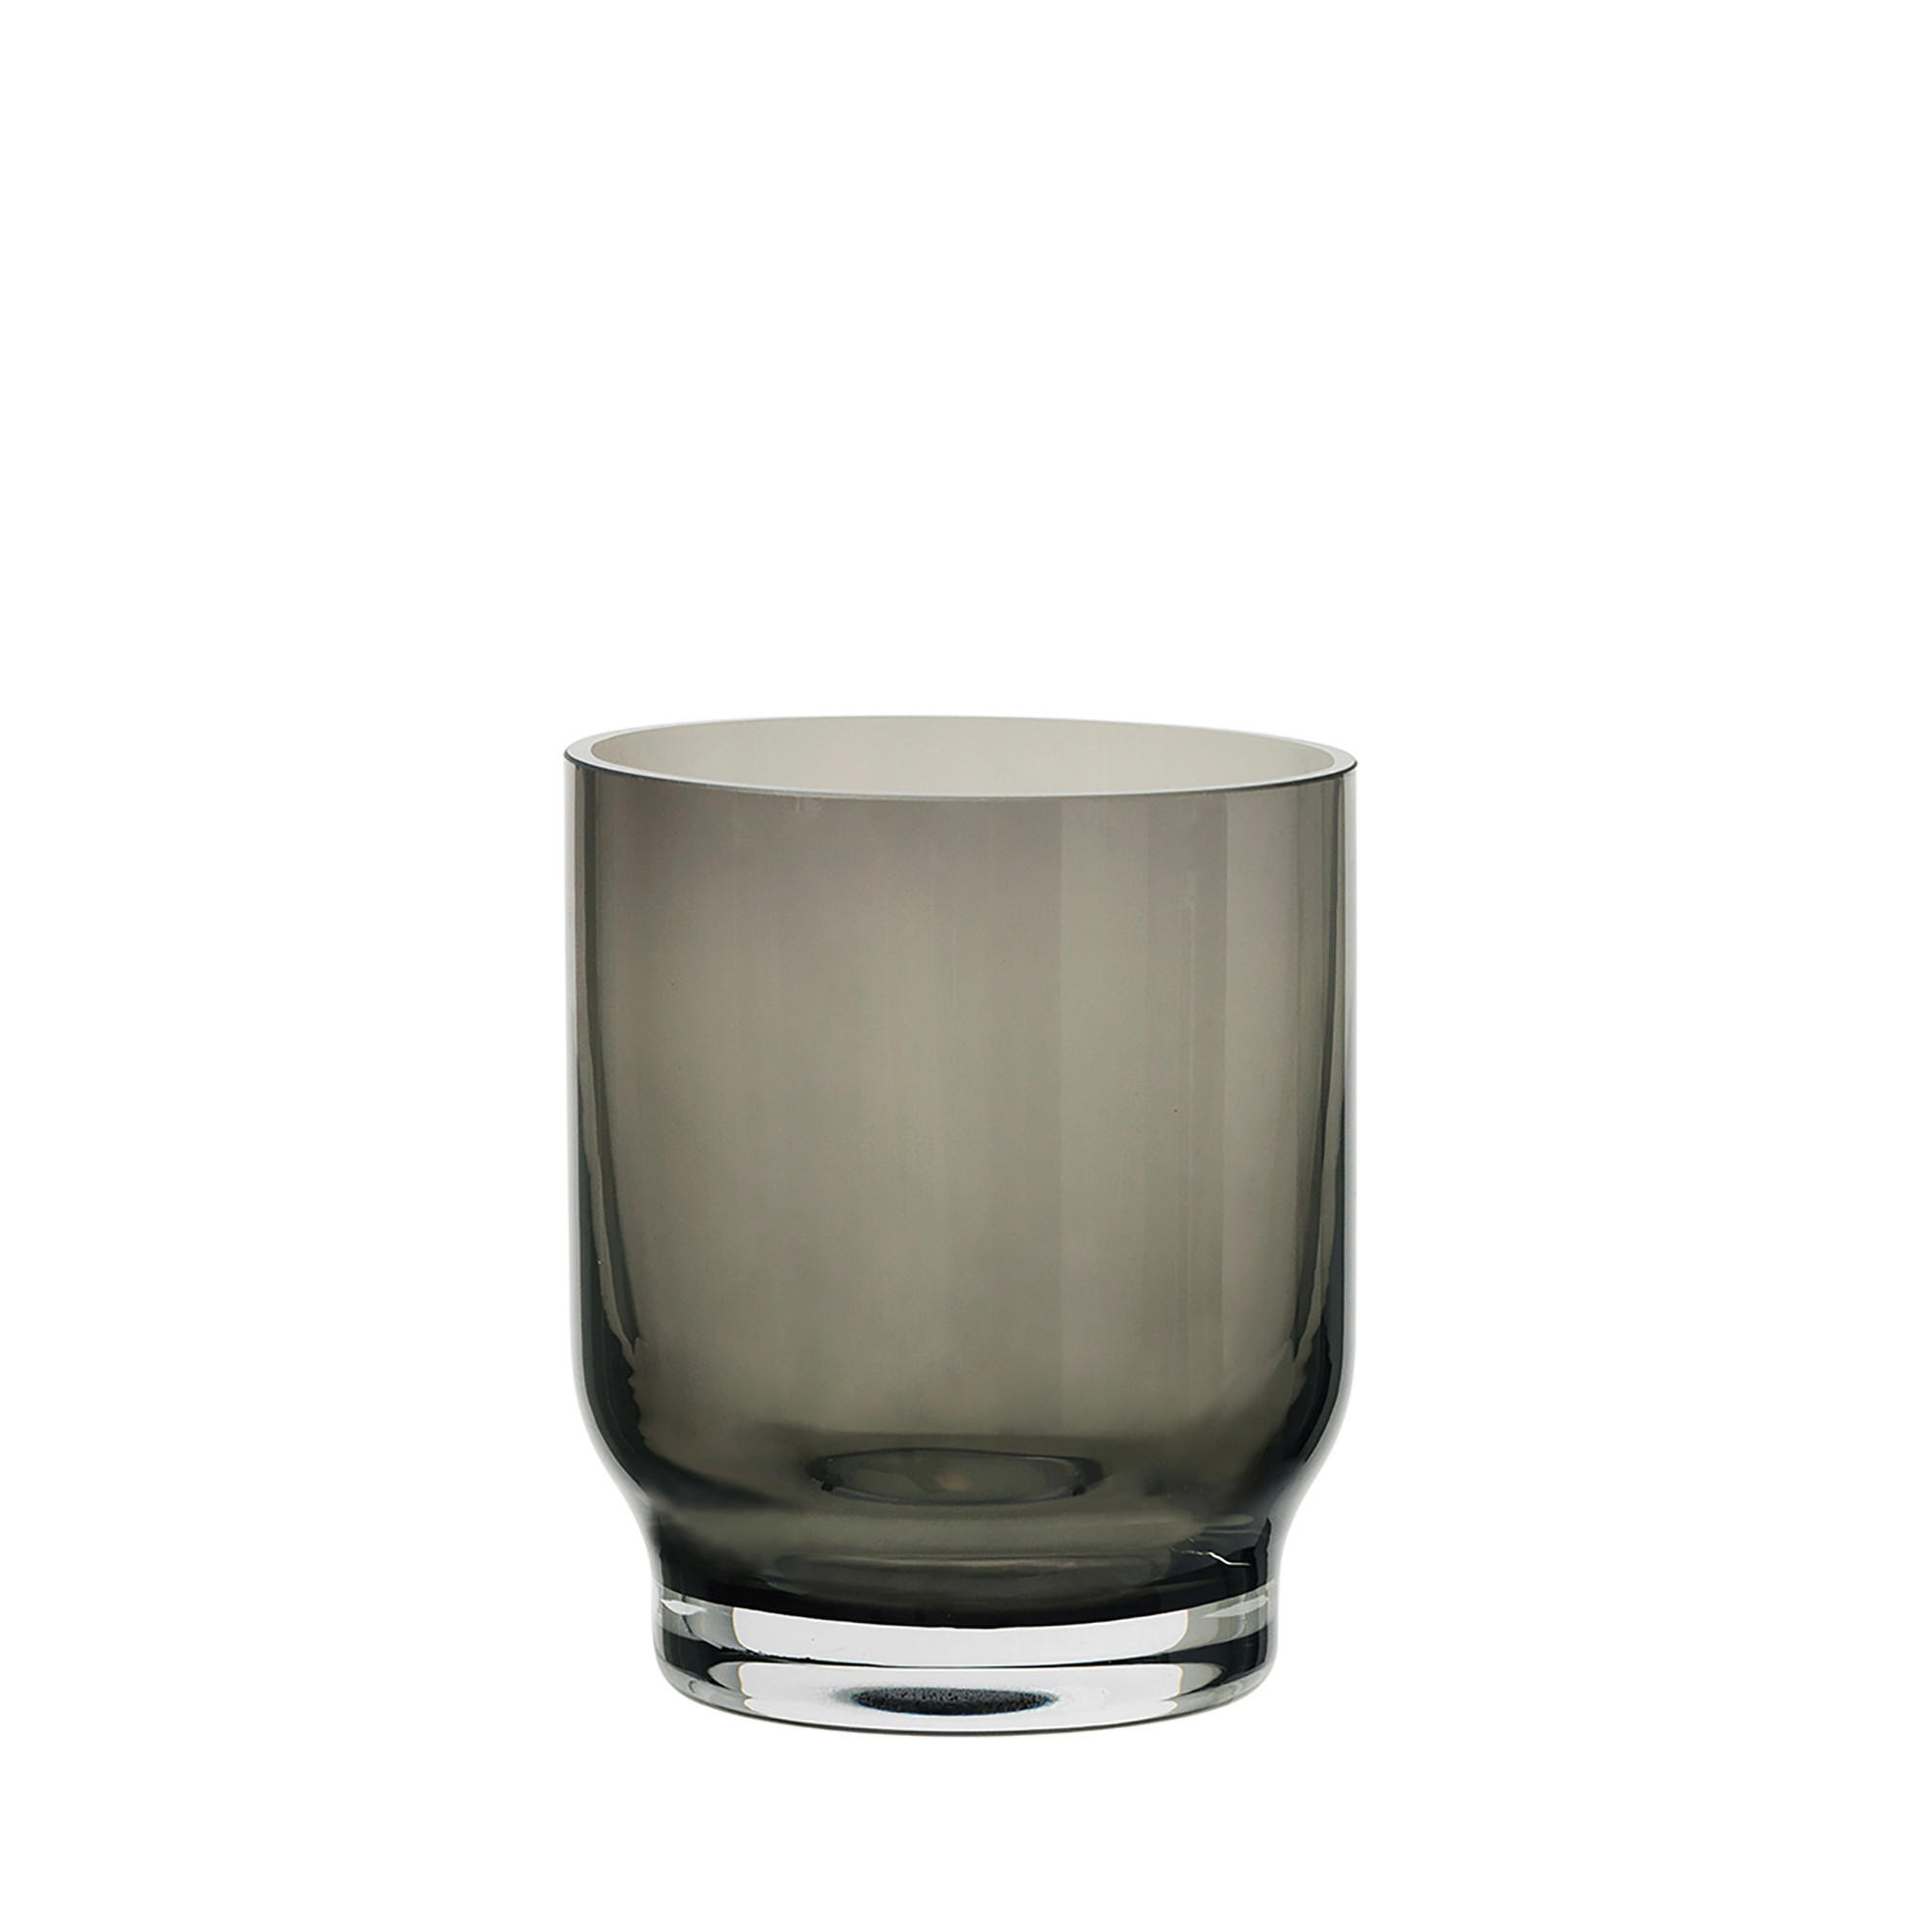 GLÄSERSET  2-teilig  - Grau, Design, Glas (8/9,6cm) - Blomus